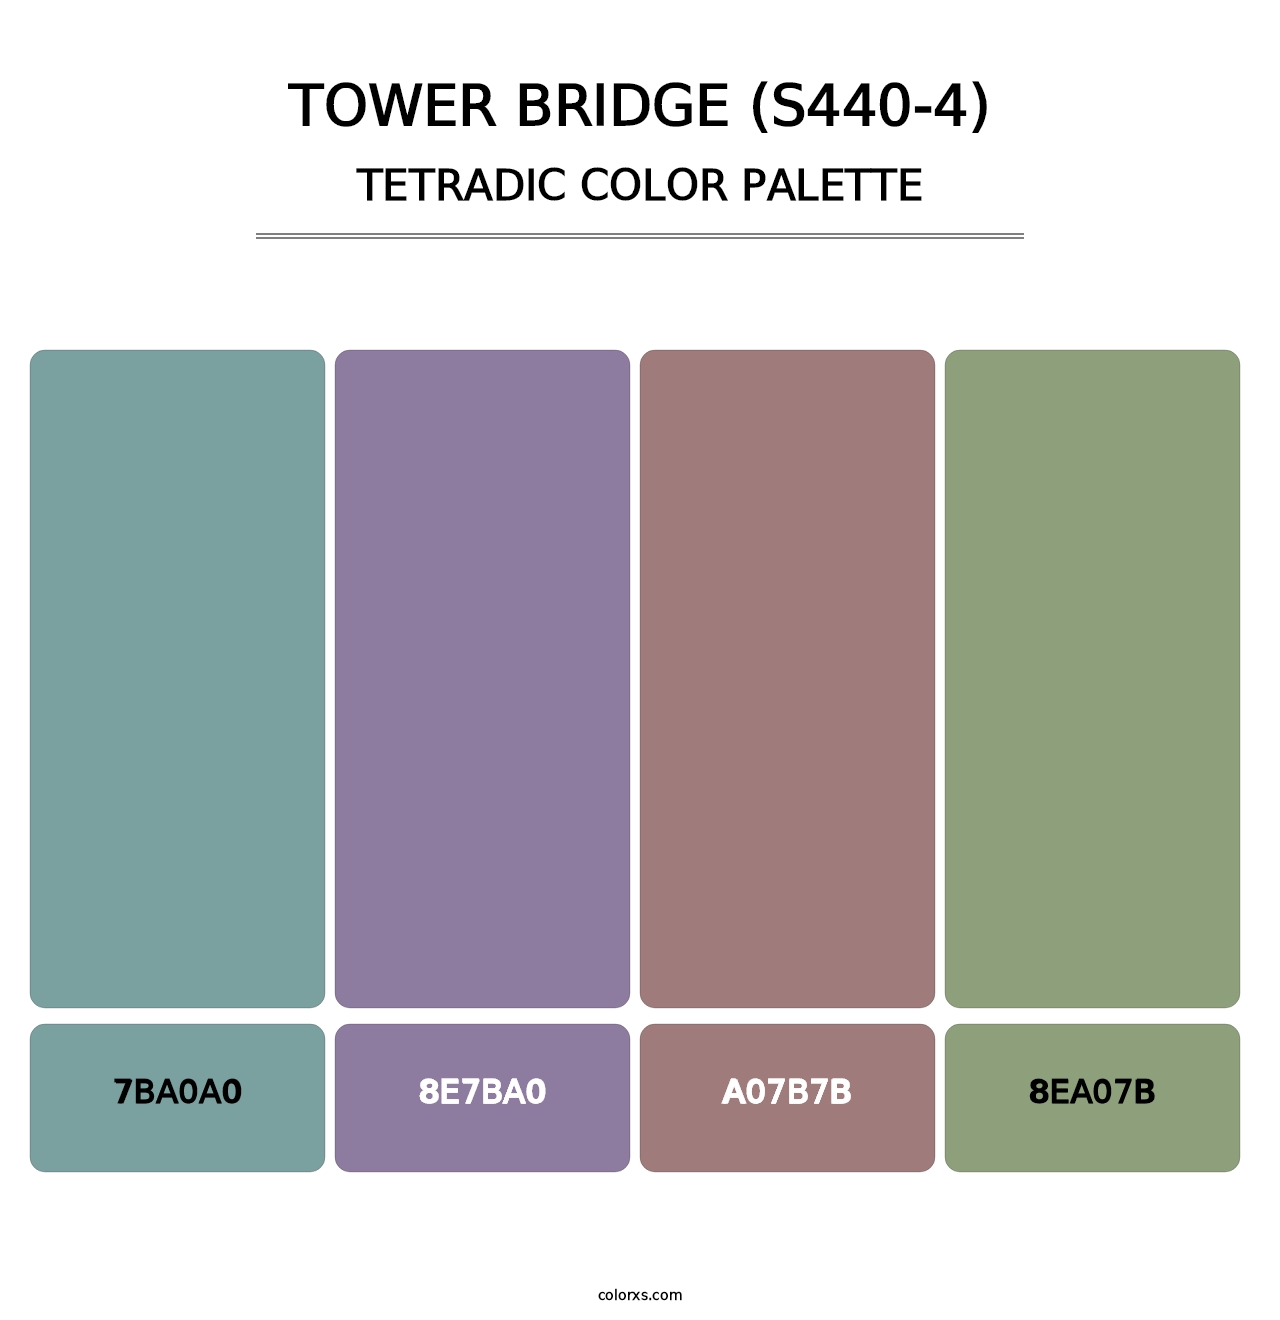 Tower Bridge (S440-4) - Tetradic Color Palette